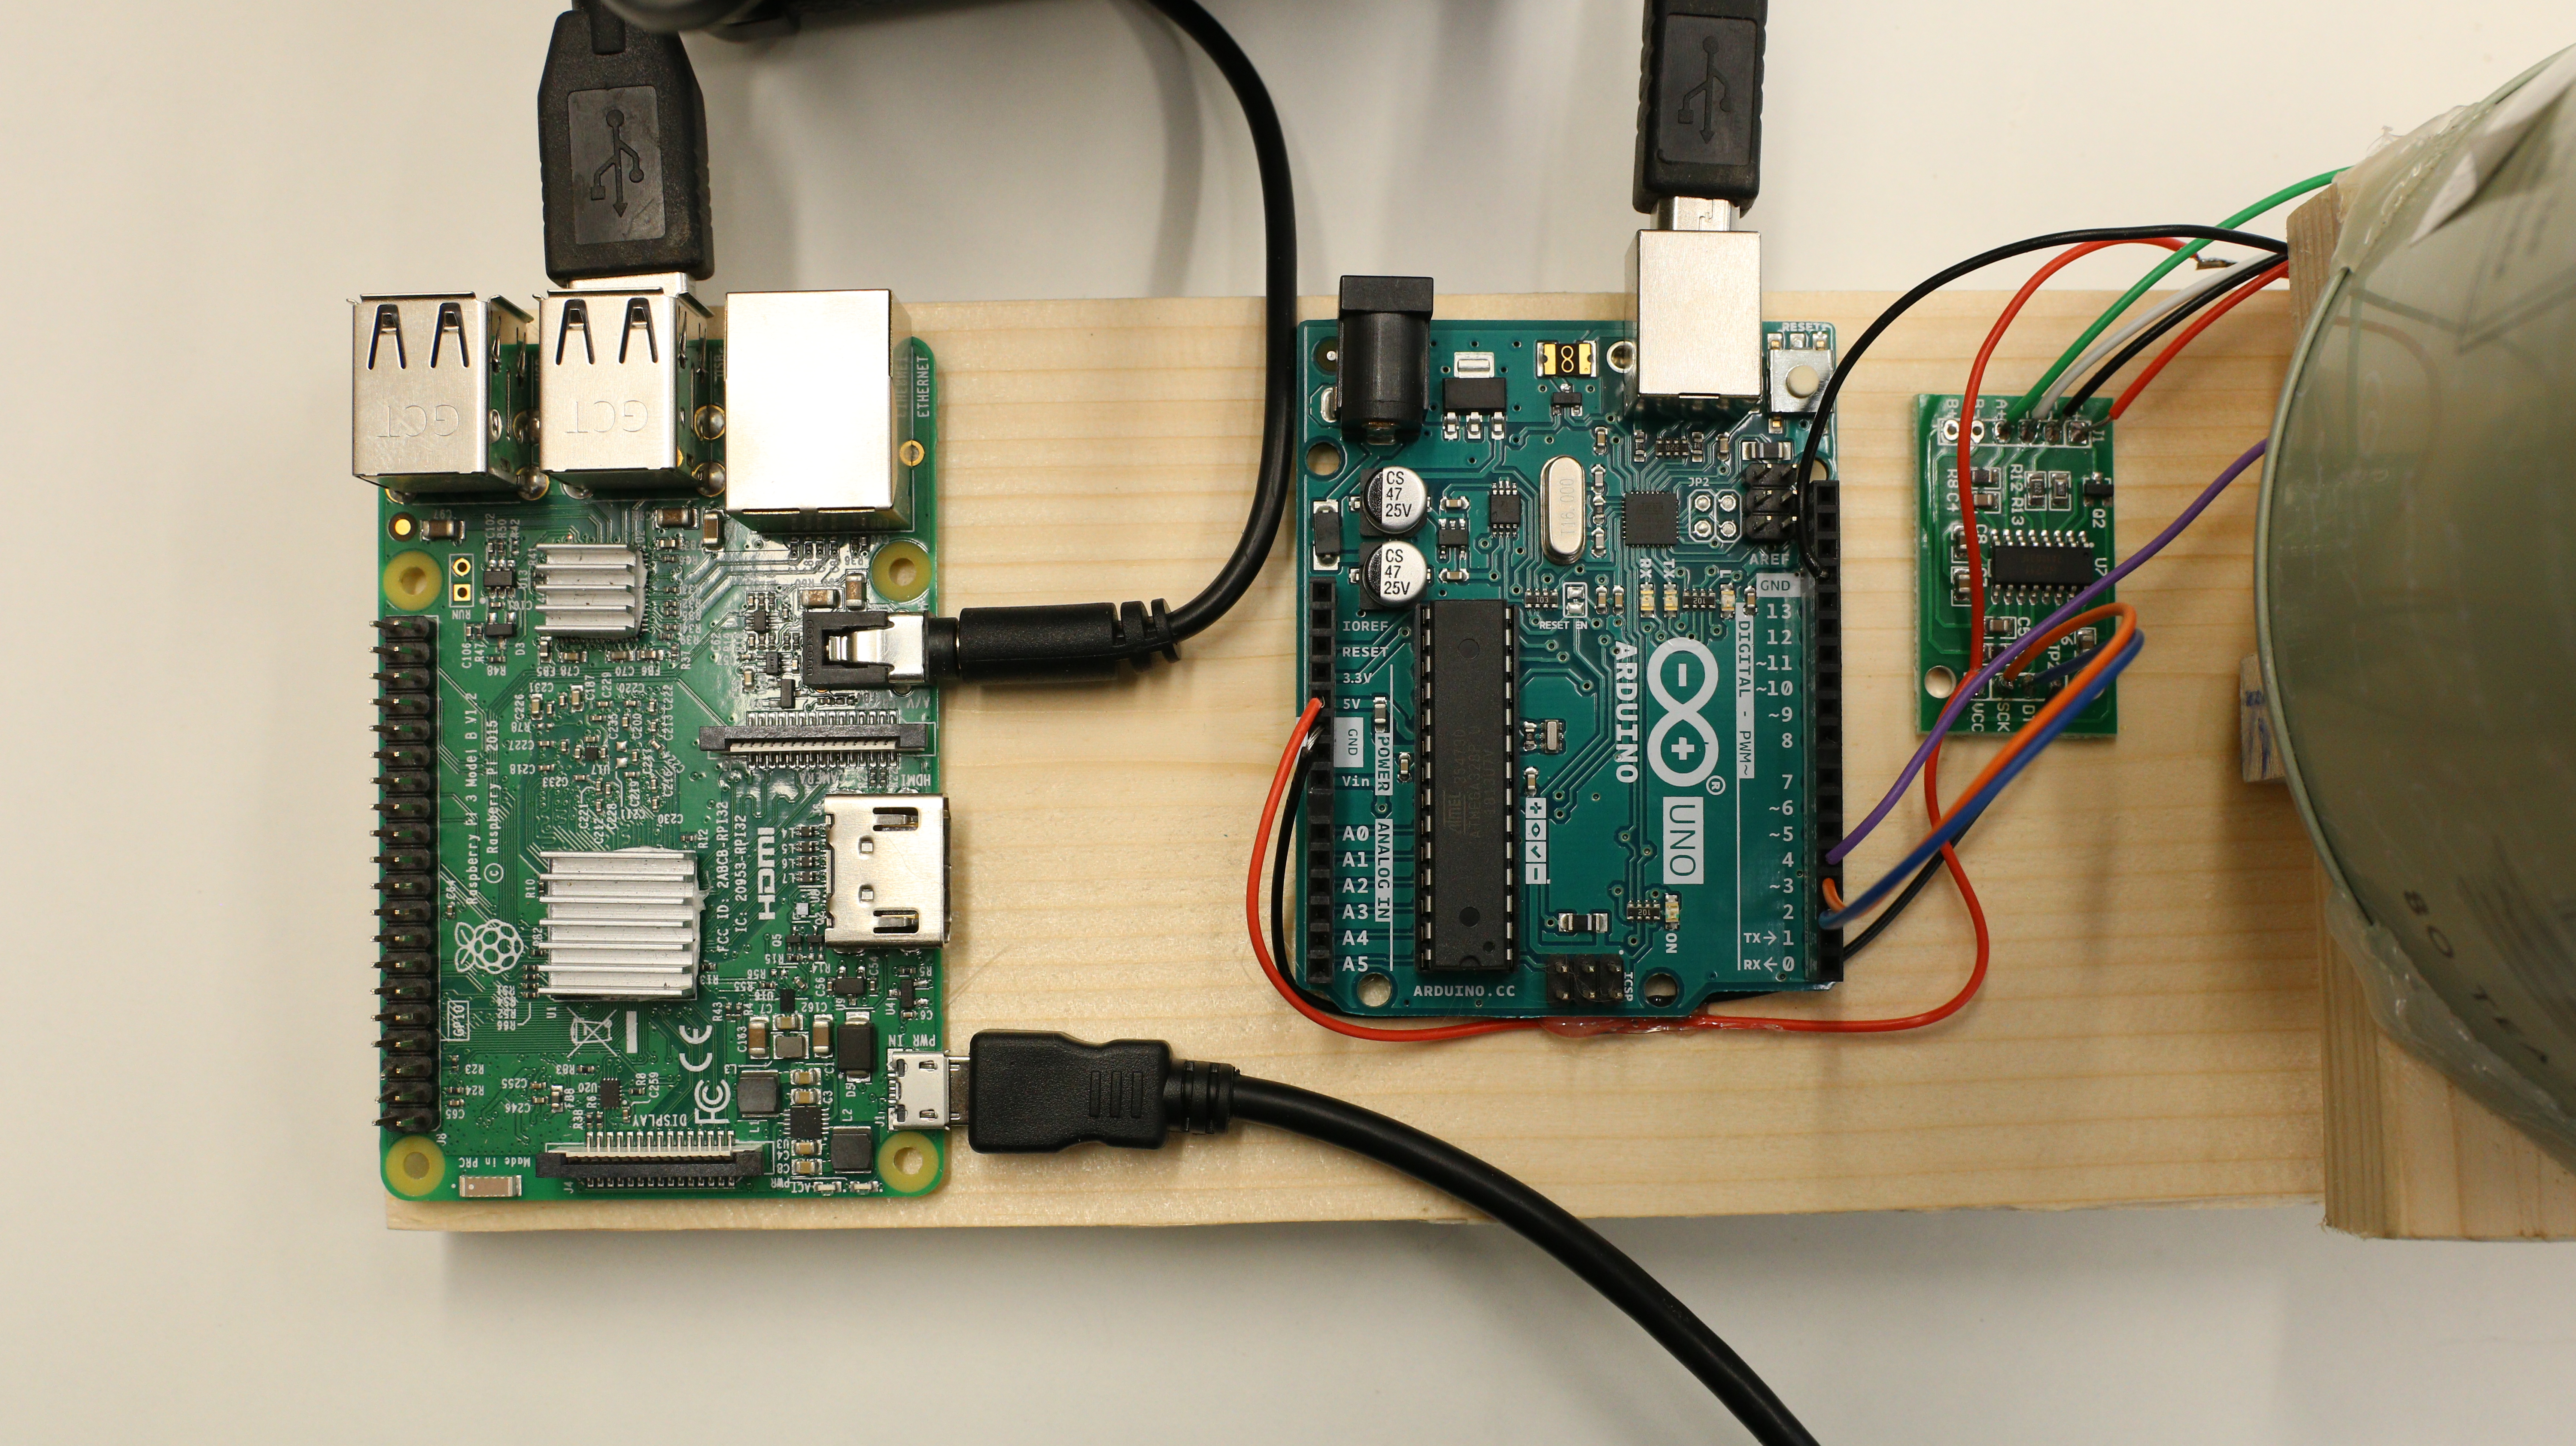 The Intelli-T Raspberry Pi sensor alarm